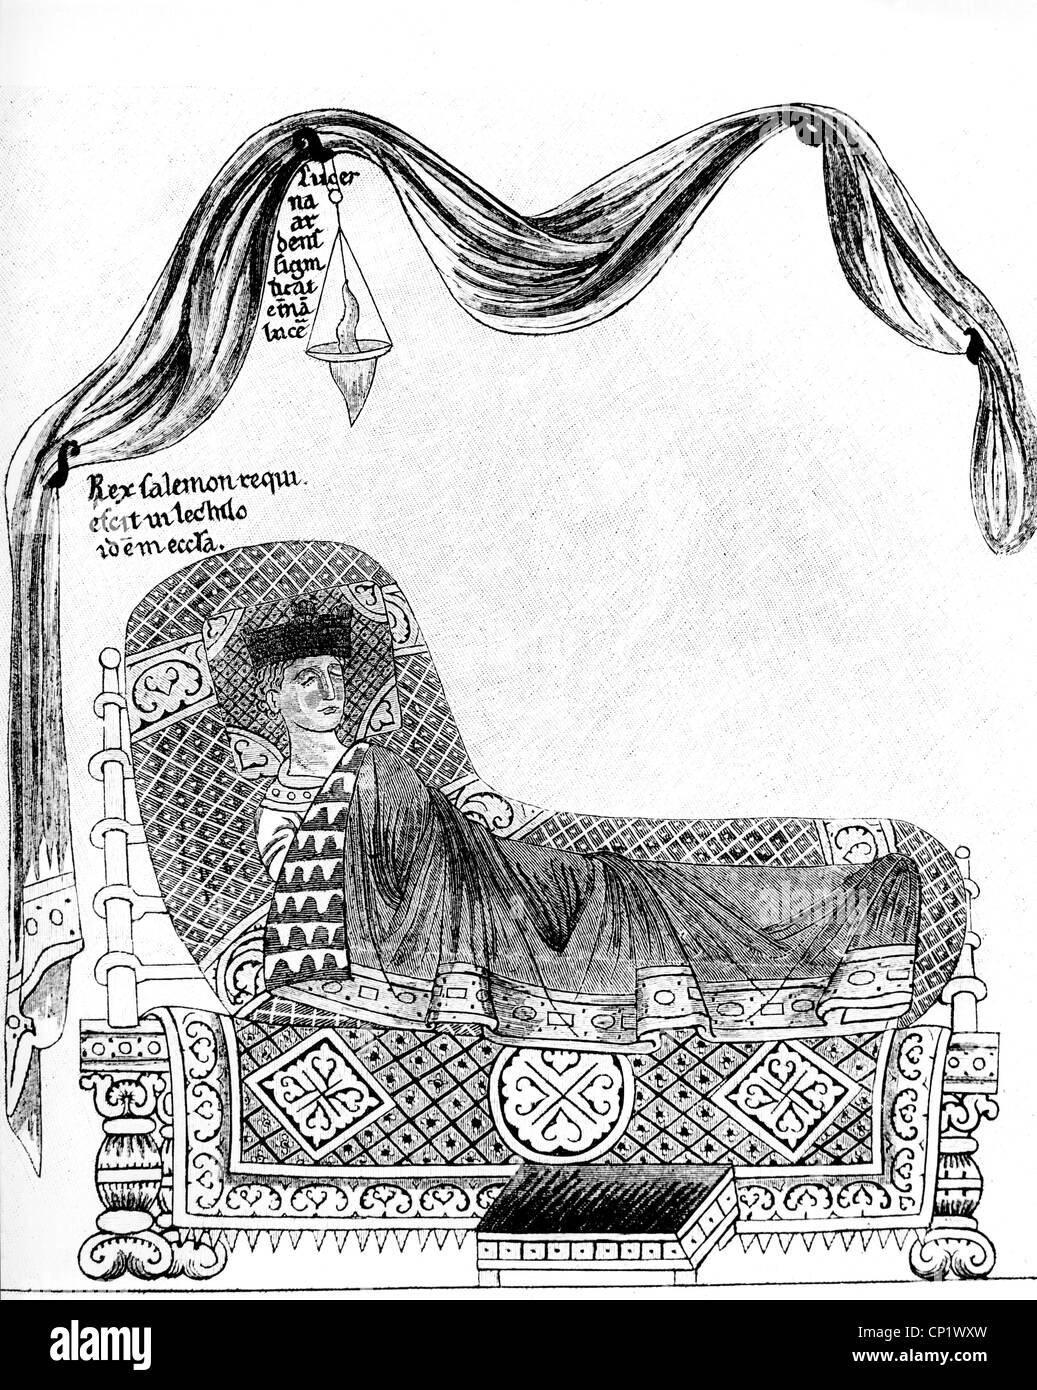 Solomon, King of Israel circa 971 - 931 BC, full length, lying on bed, illustration from 'Hortus Deliciarum', by Herrad von Landsberg, 1175 - 1195, Stock Photo